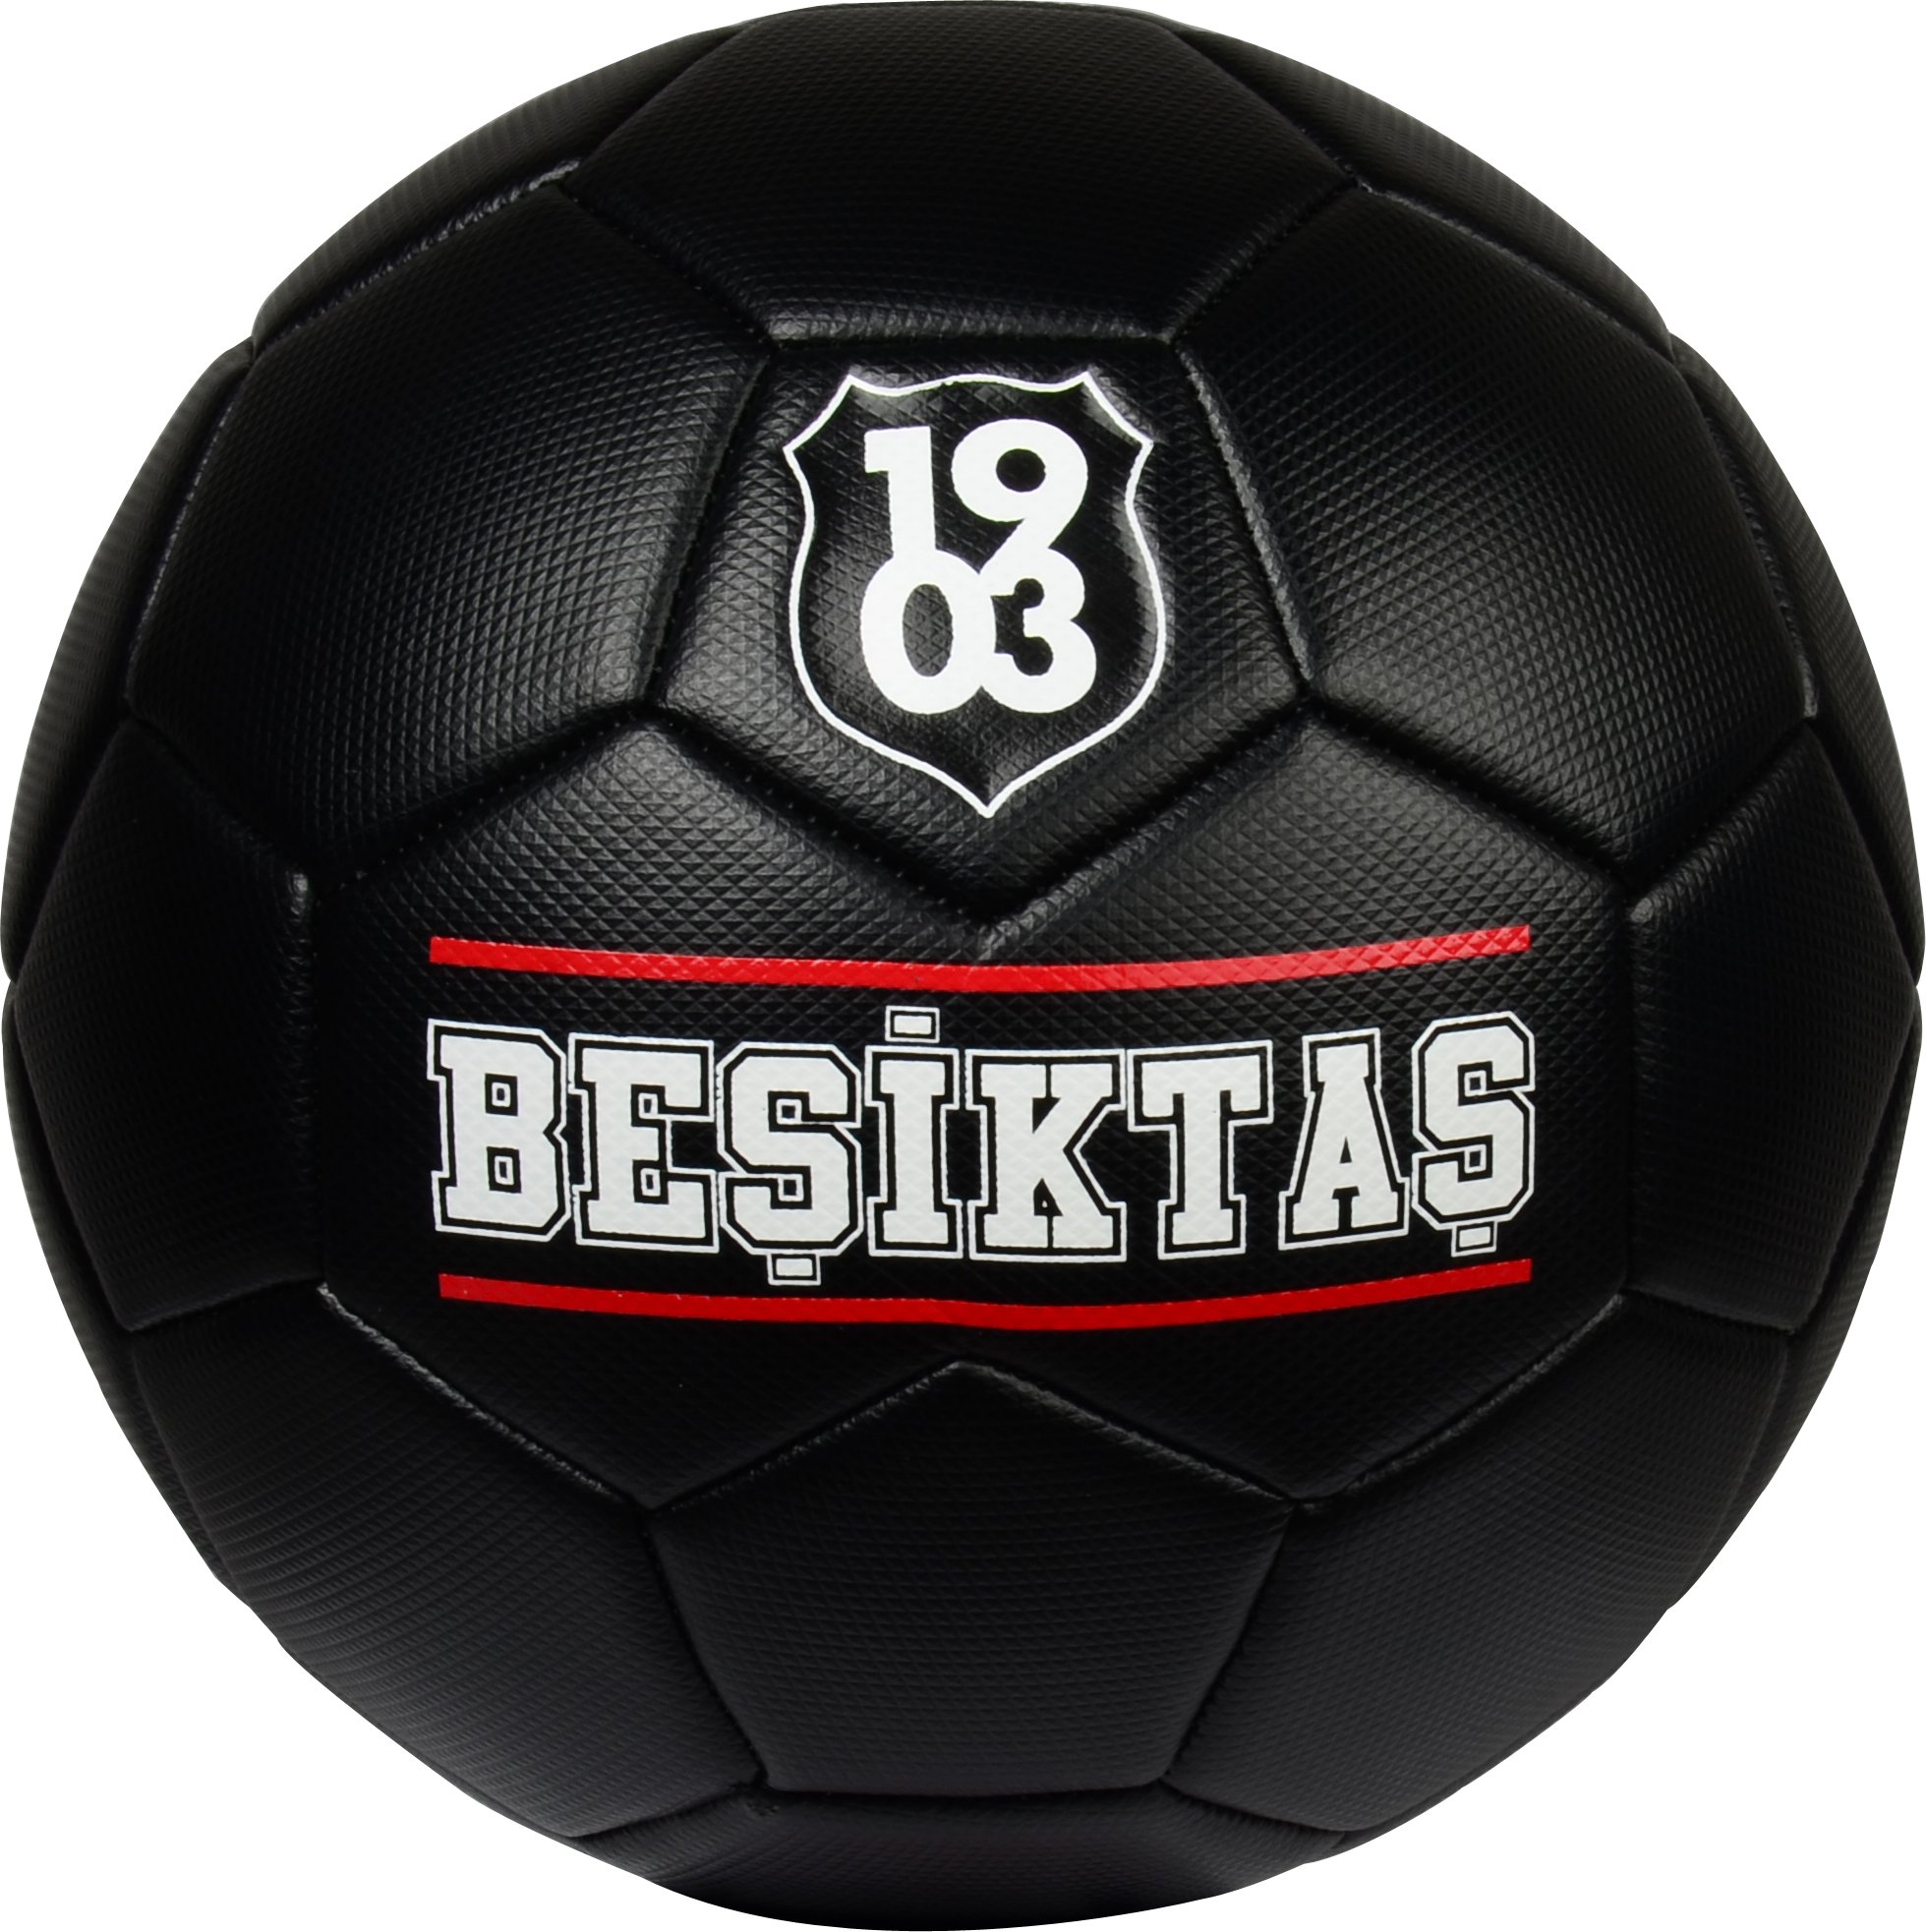 Beşiktaş Orjinal Lisanslı Futbol Topu - Siyah